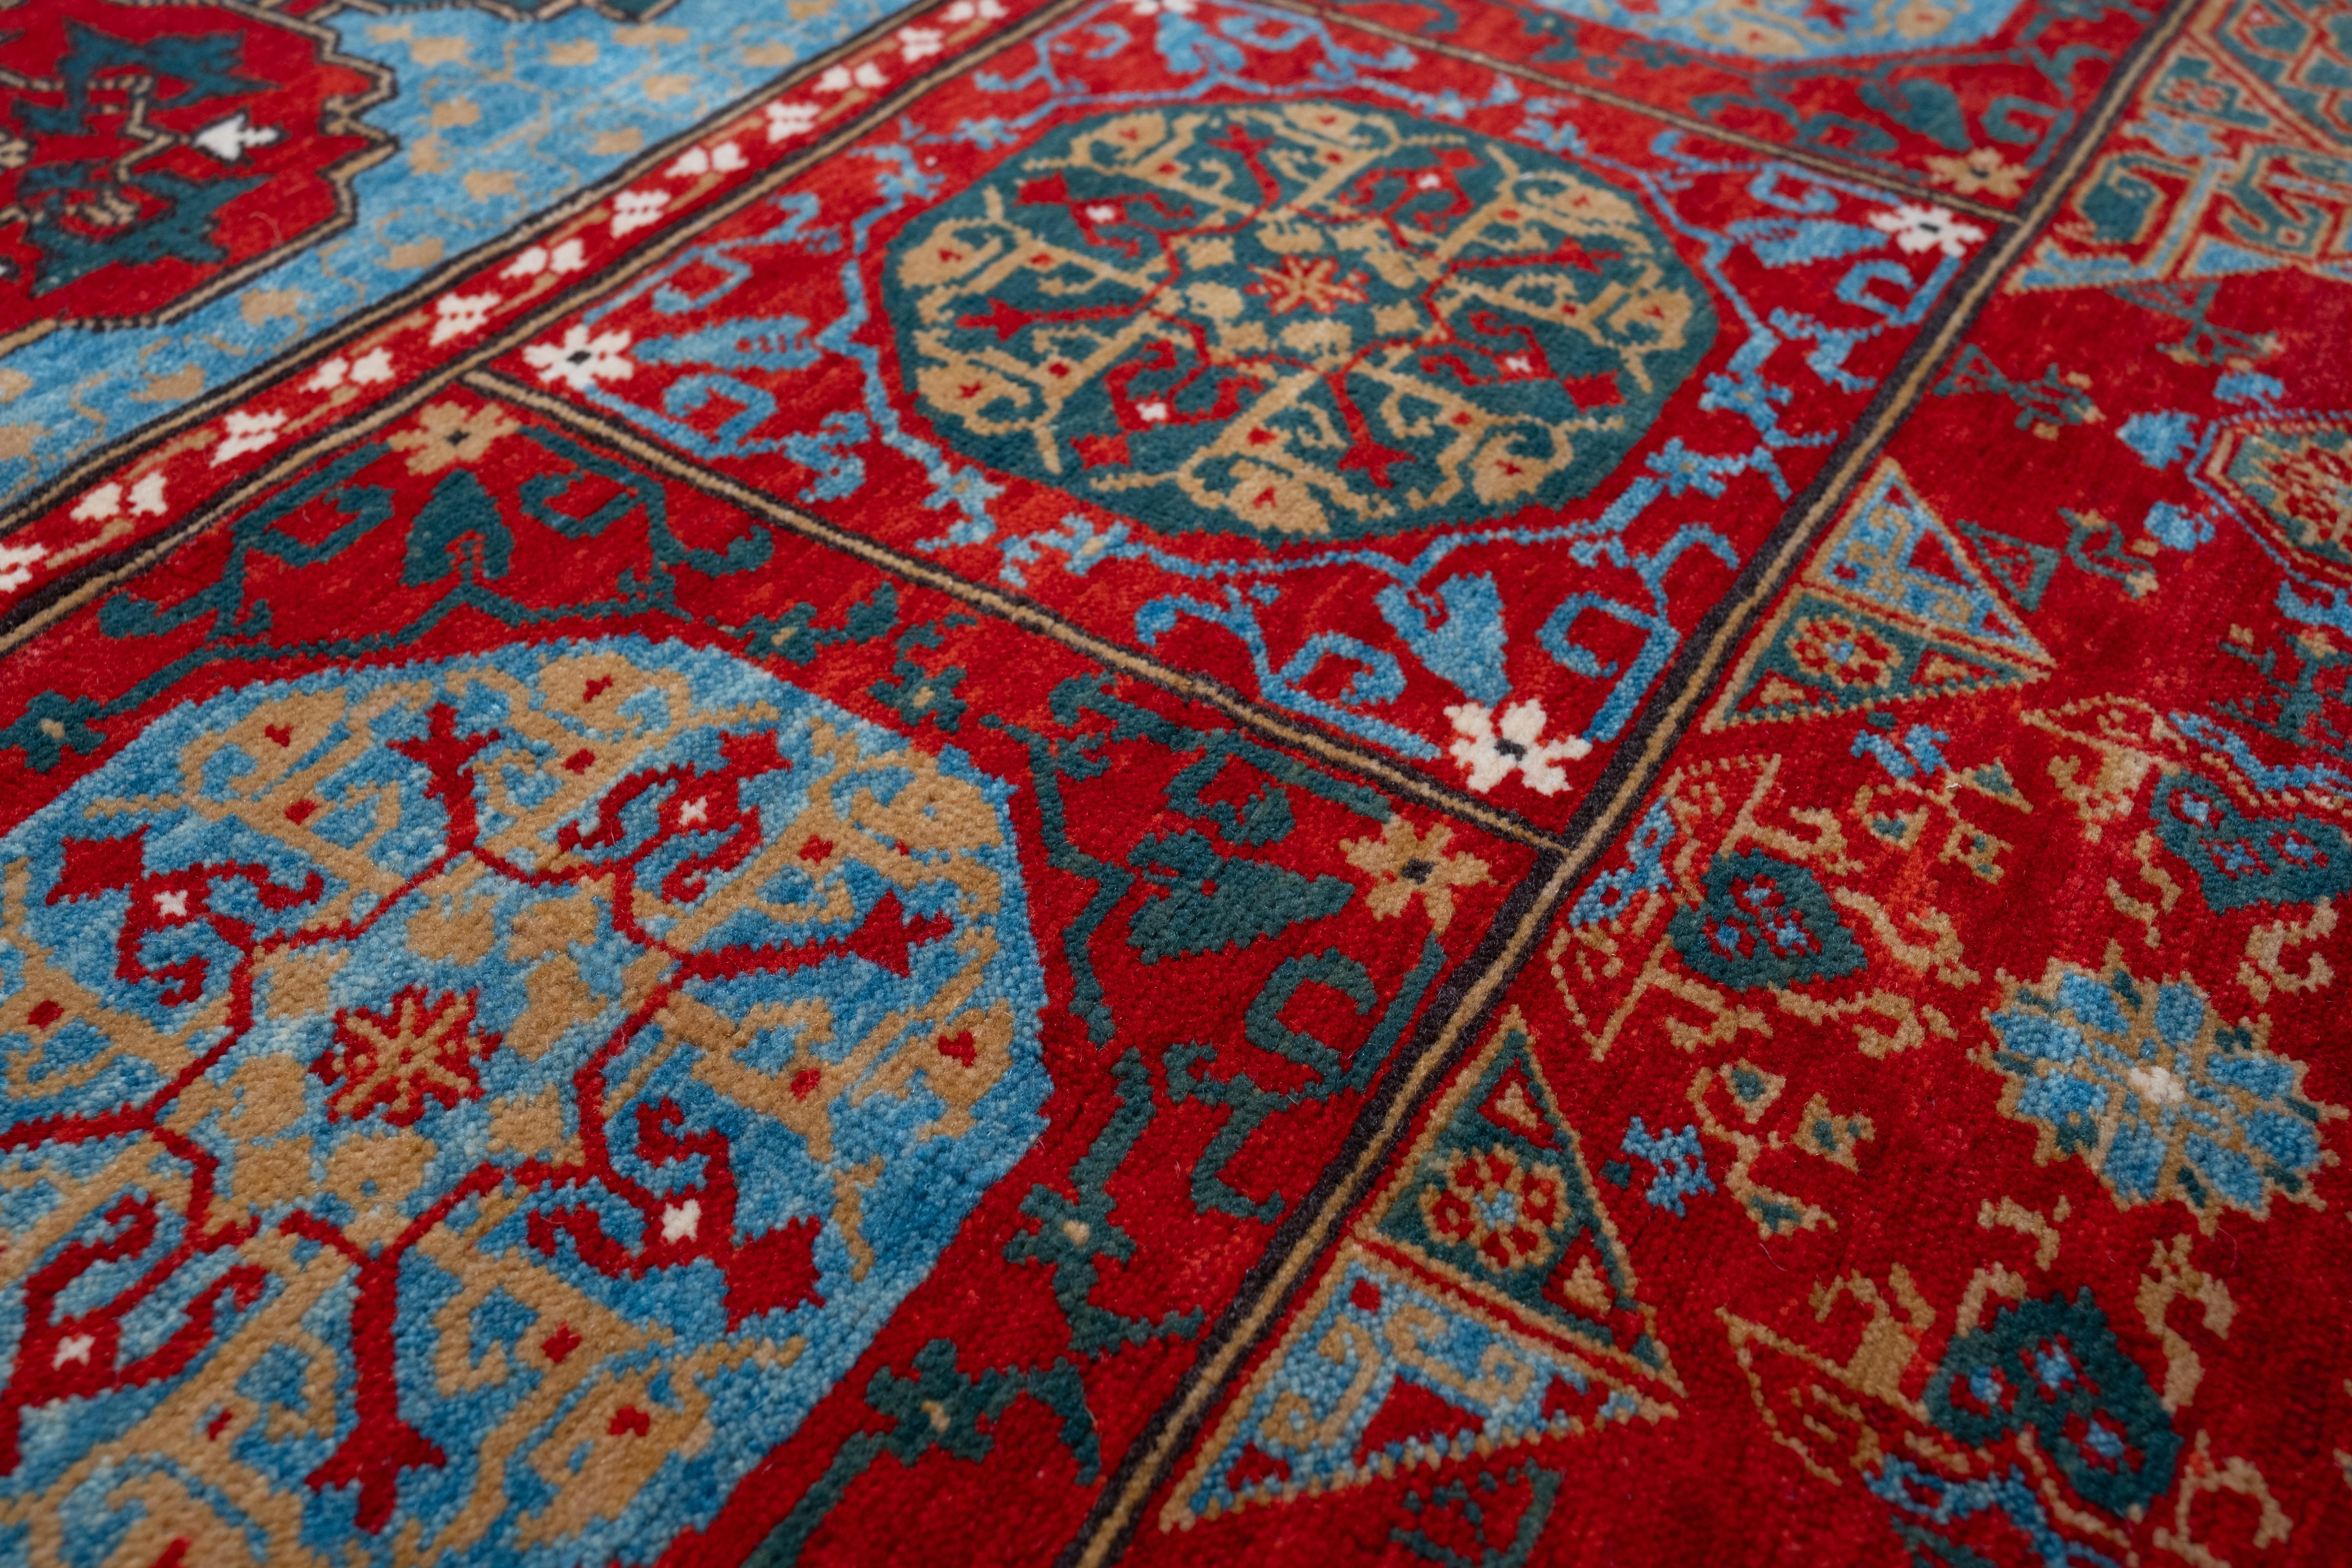 Turkish Ararat Rugs The Simonetti Mamluk Carpet 16th C. Revival Rug, Square Natural Dyed For Sale